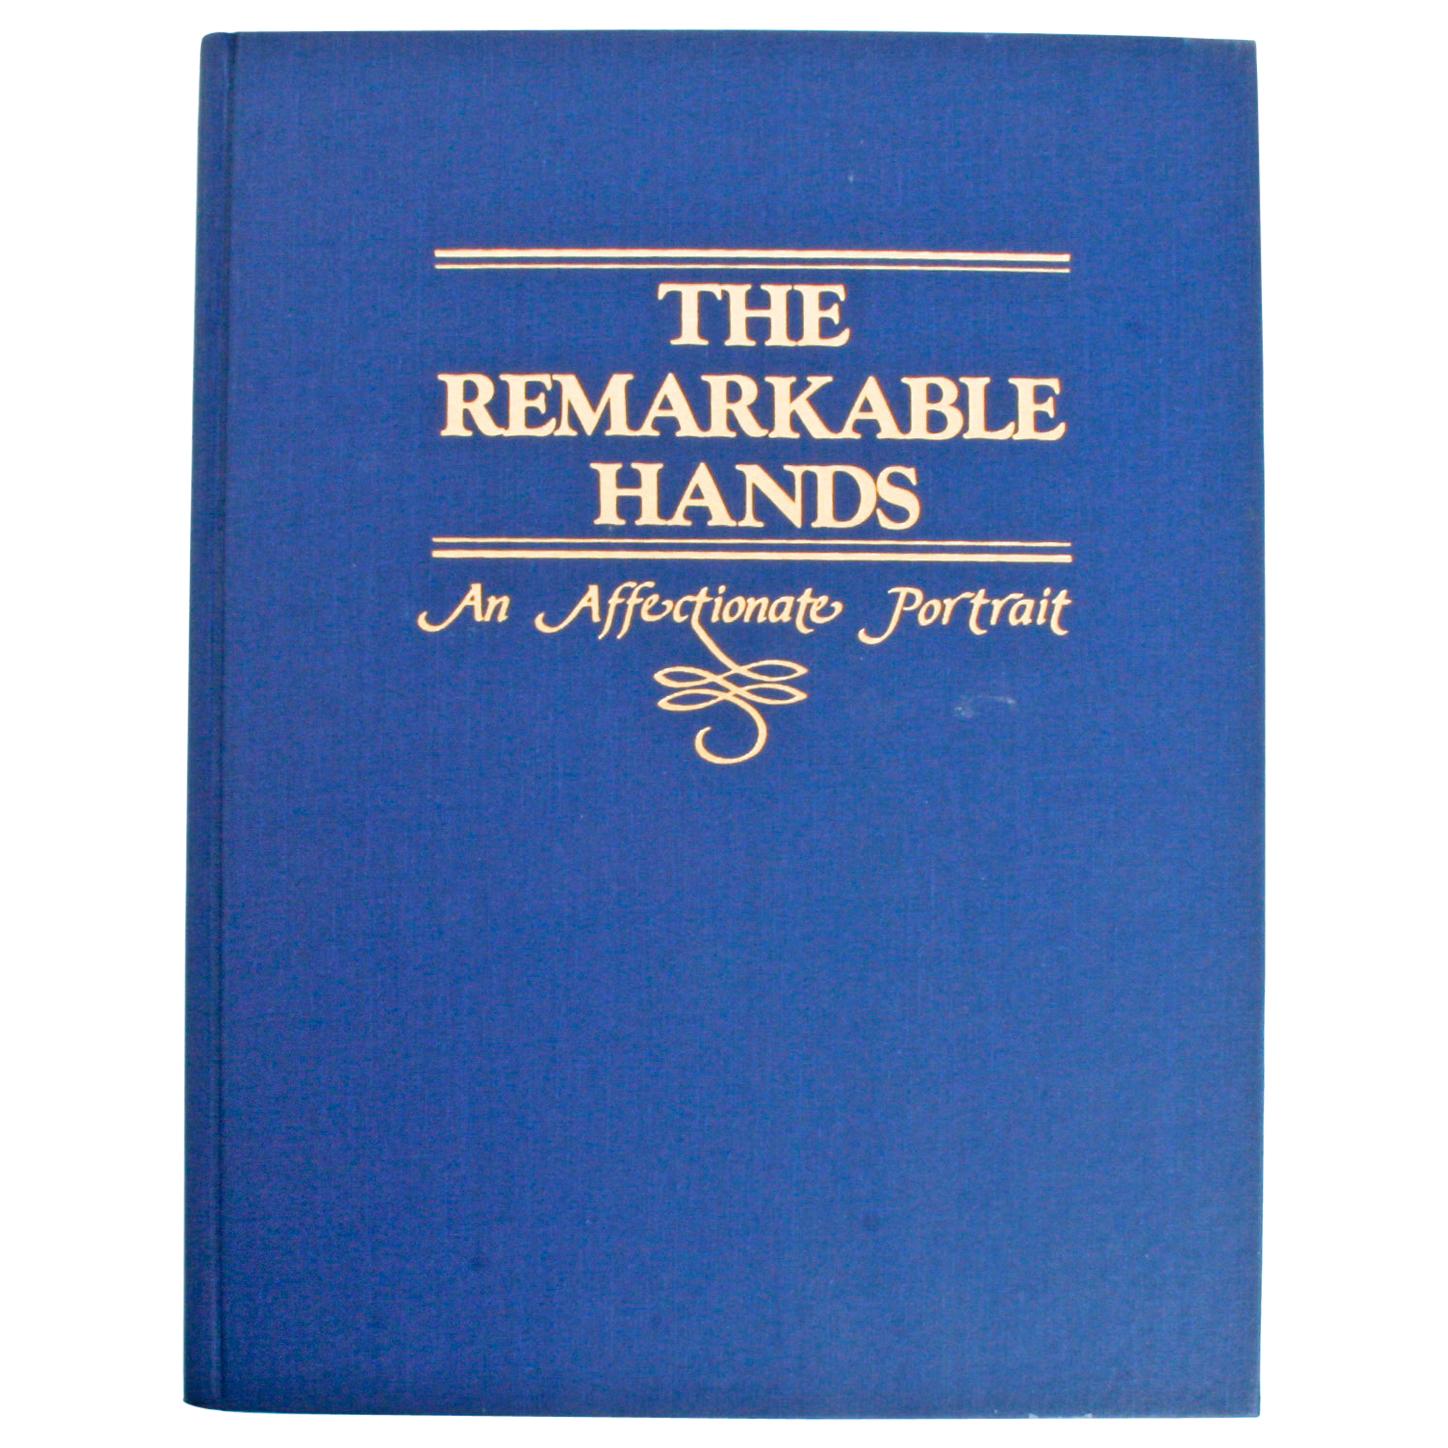 The Remarkable Hands, An Affectionate Portrait